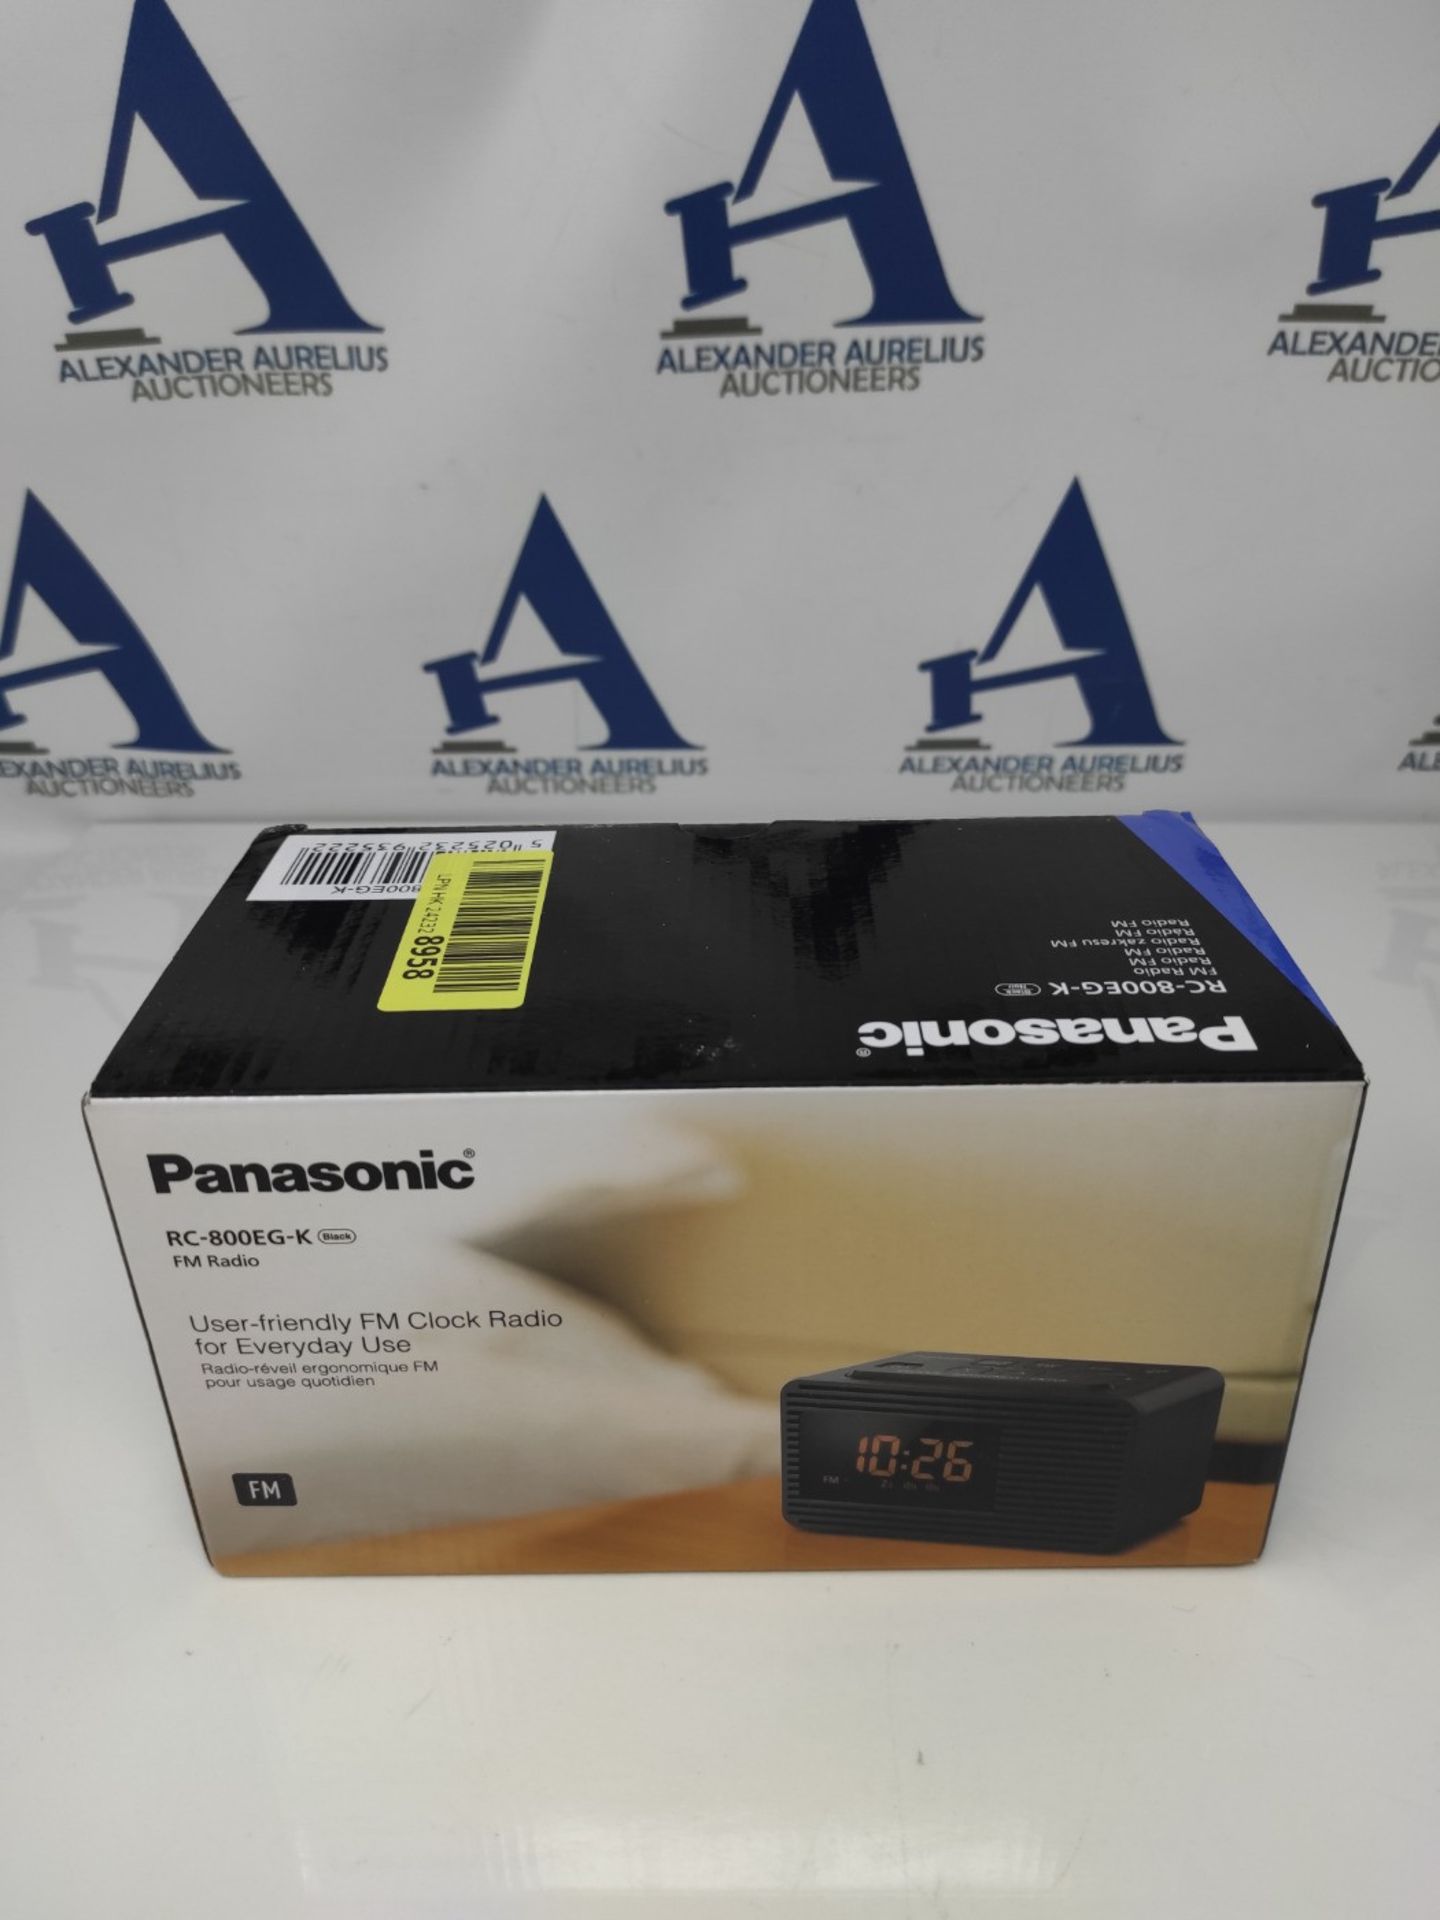 Panasonic RC-800EG-K Alarm Clock Radio (Snooze Button, Sleep Timer, Favorite Button) B - Image 2 of 3